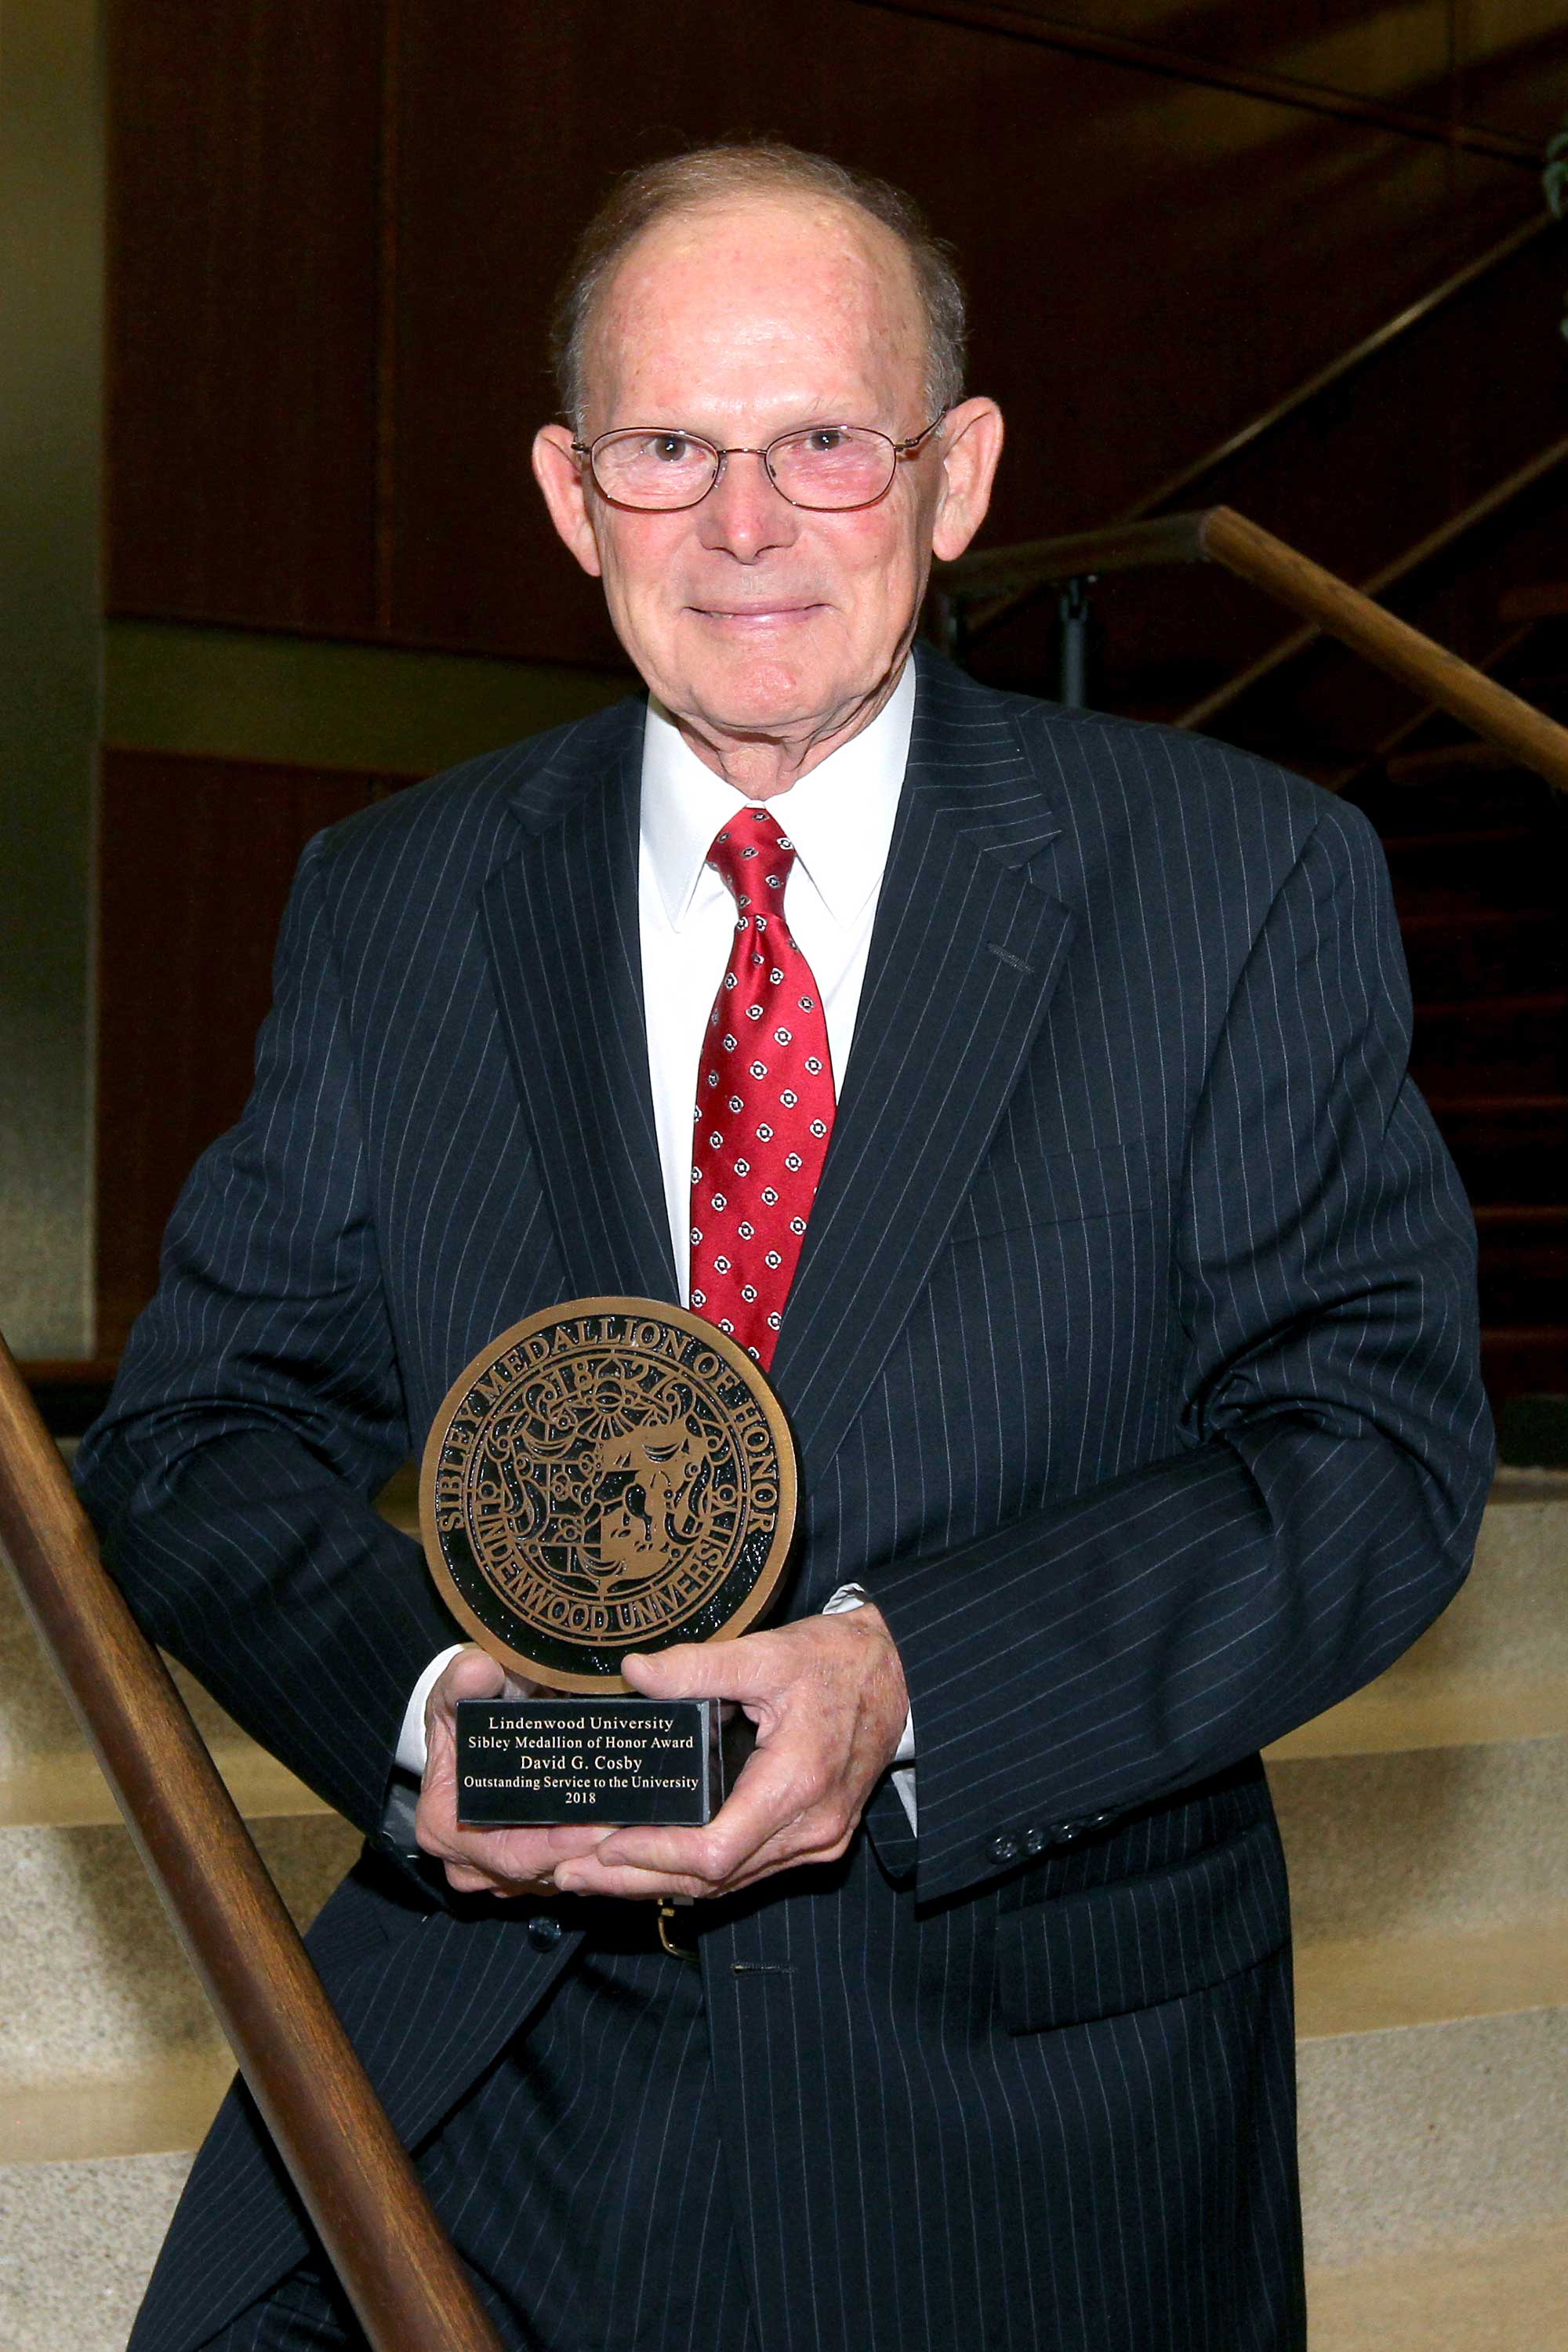 David G. Cosby with award